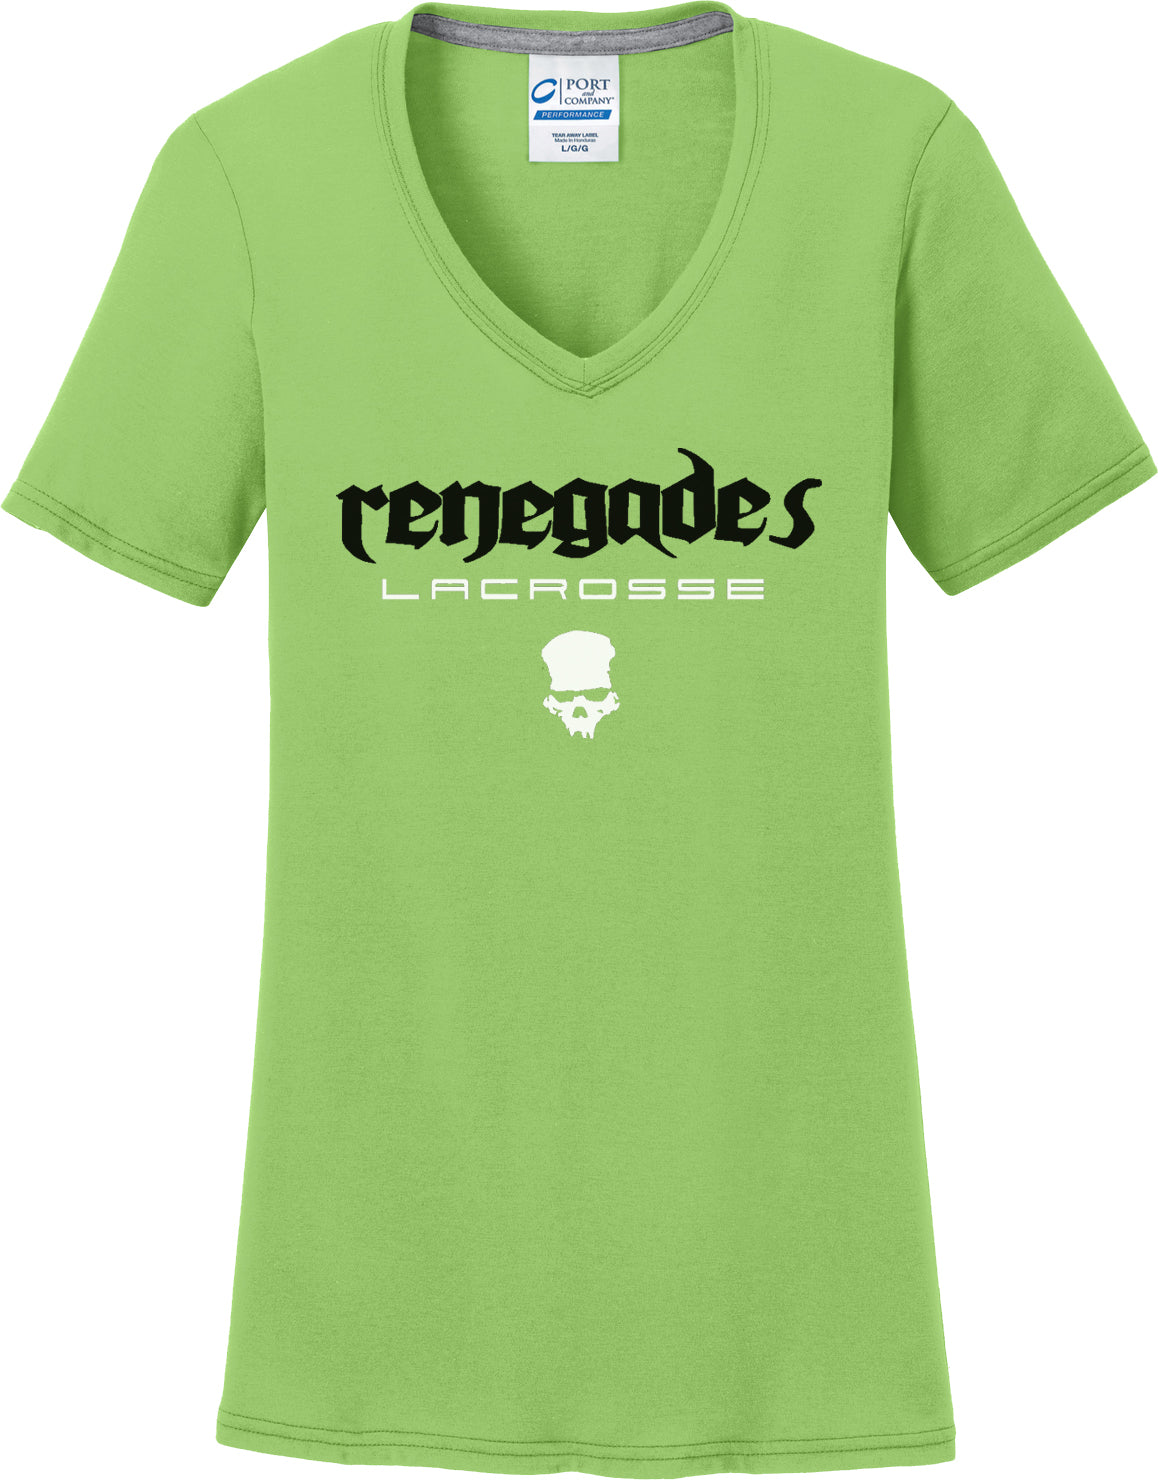 Renegades Lacrosse Lime Women's T-Shirt